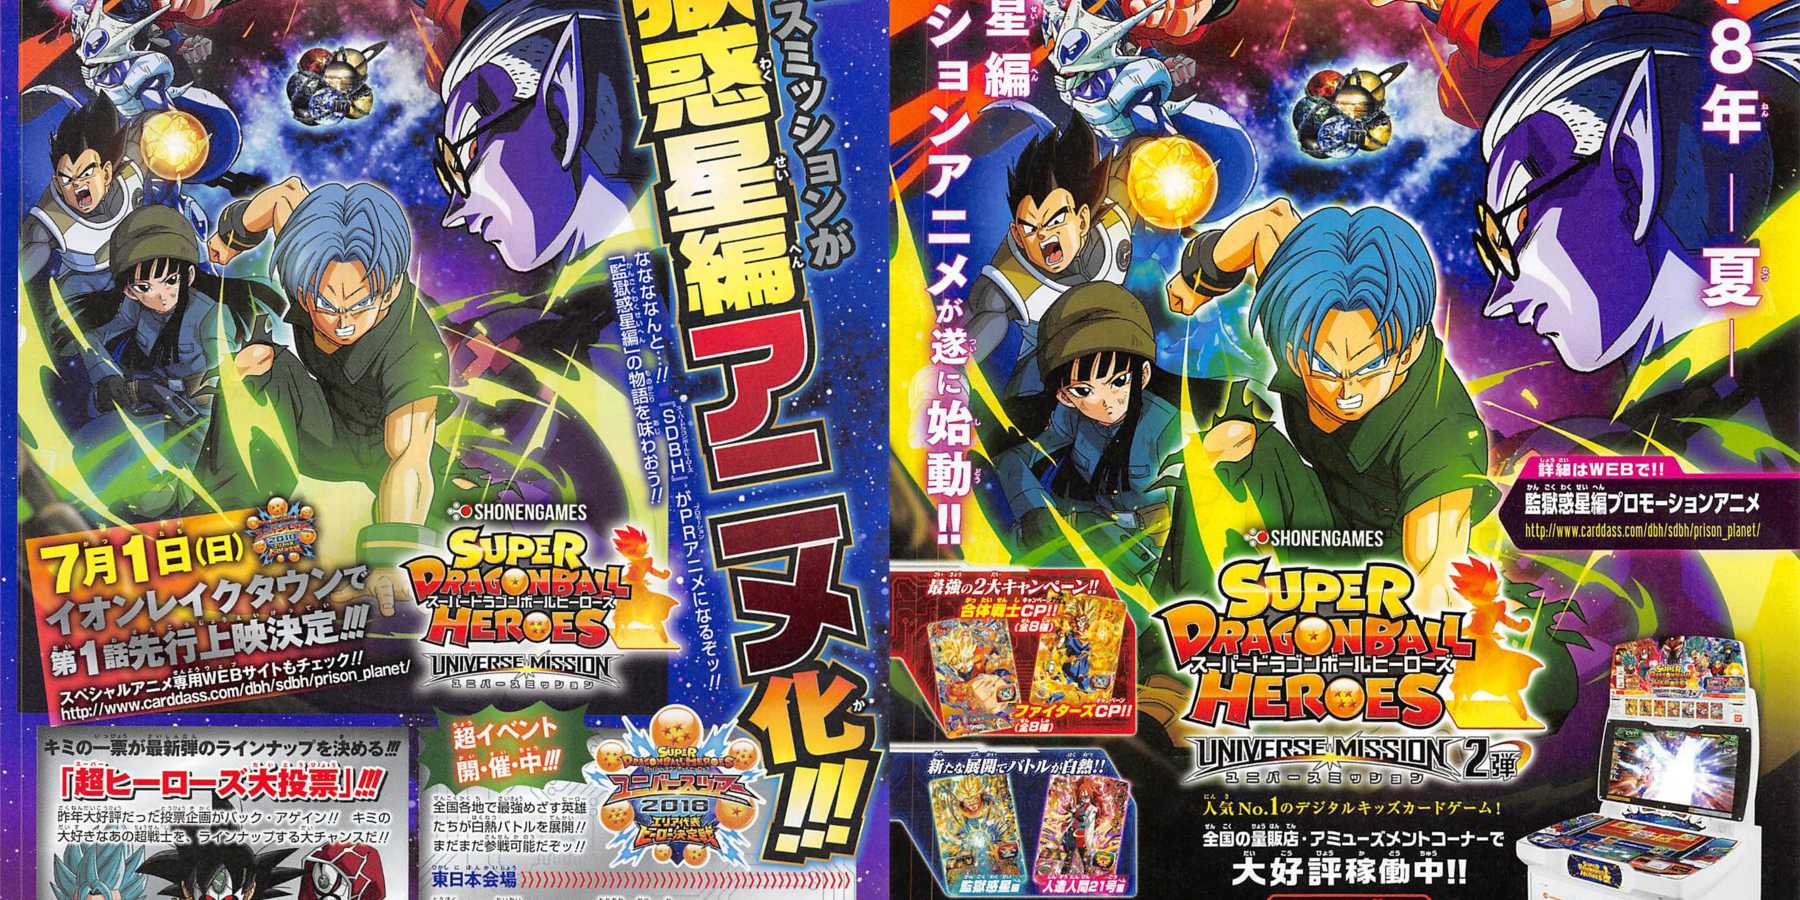 Confirman nueva serie anime para Dragon Ball Heroes